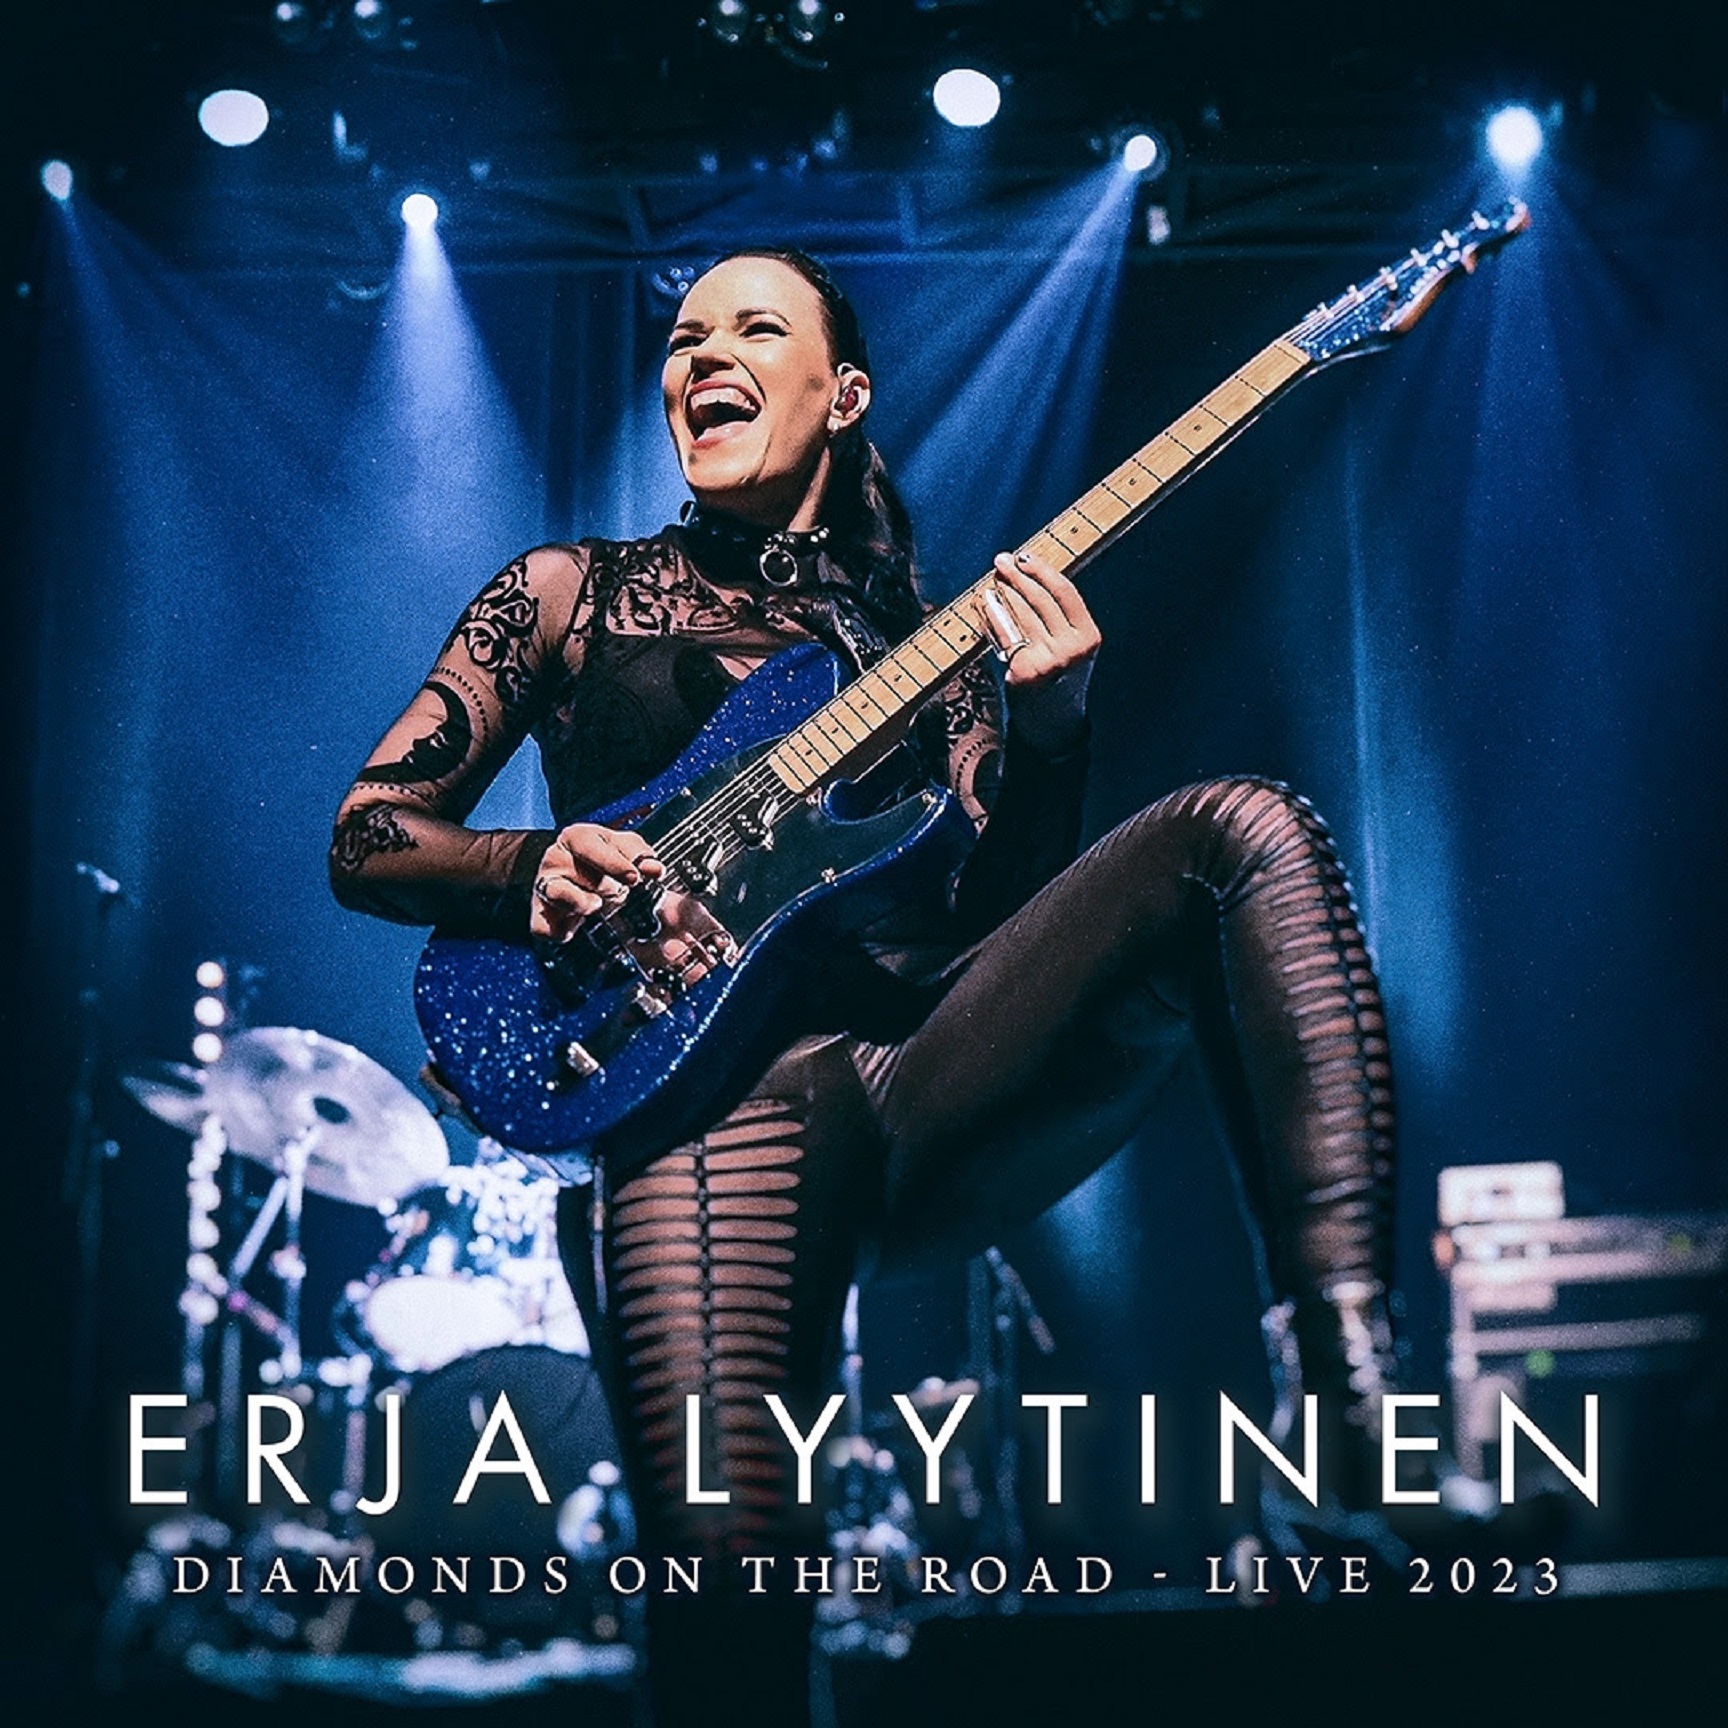 Erja Lyytinen announces new live album "Diamonds On The Road - Live 2023"